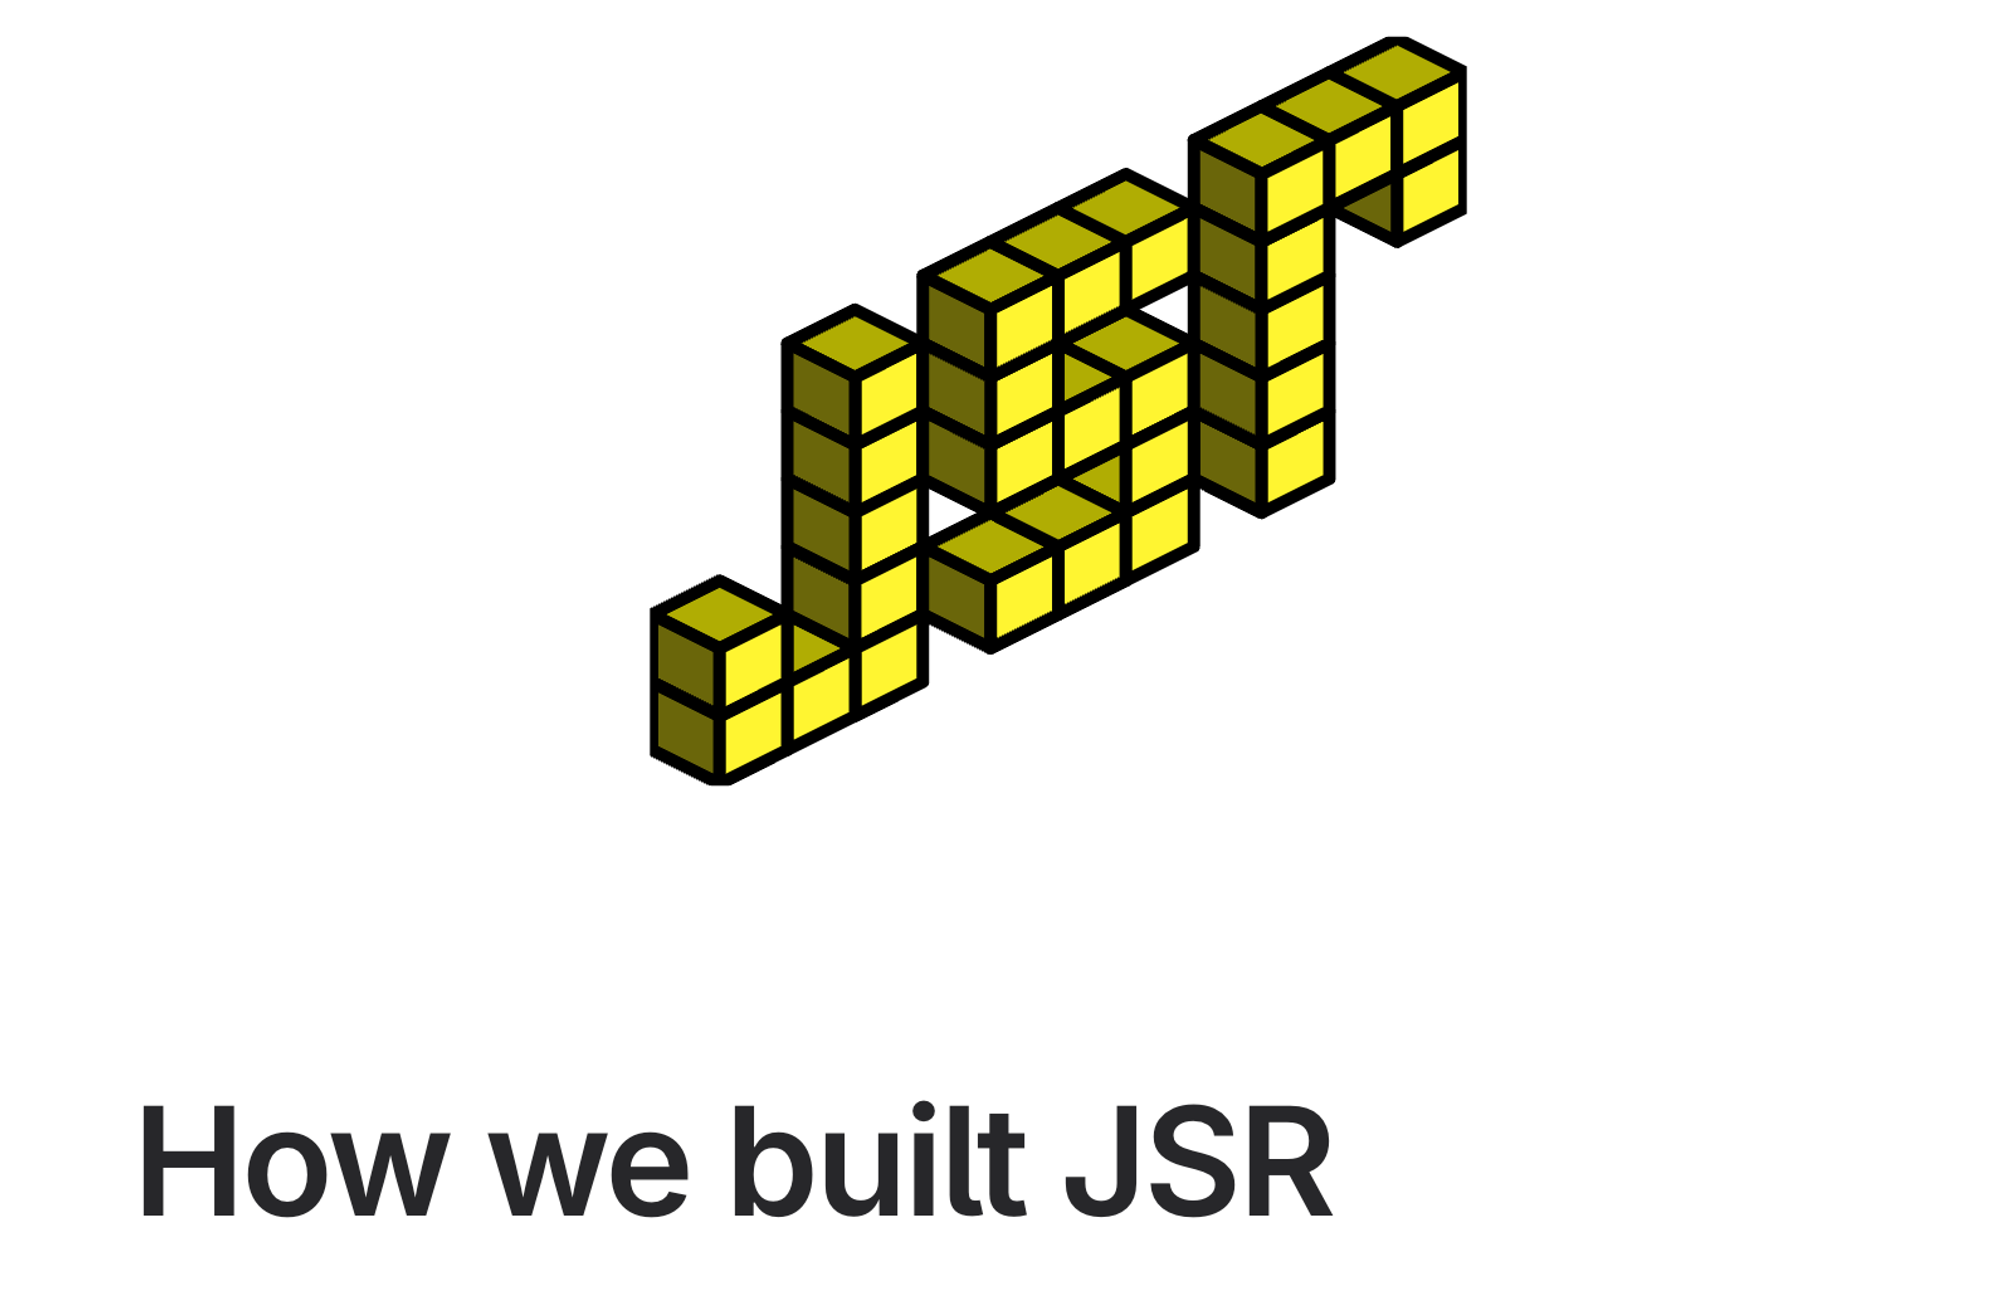 src: https://deno.com/blog/how-we-built-jsr